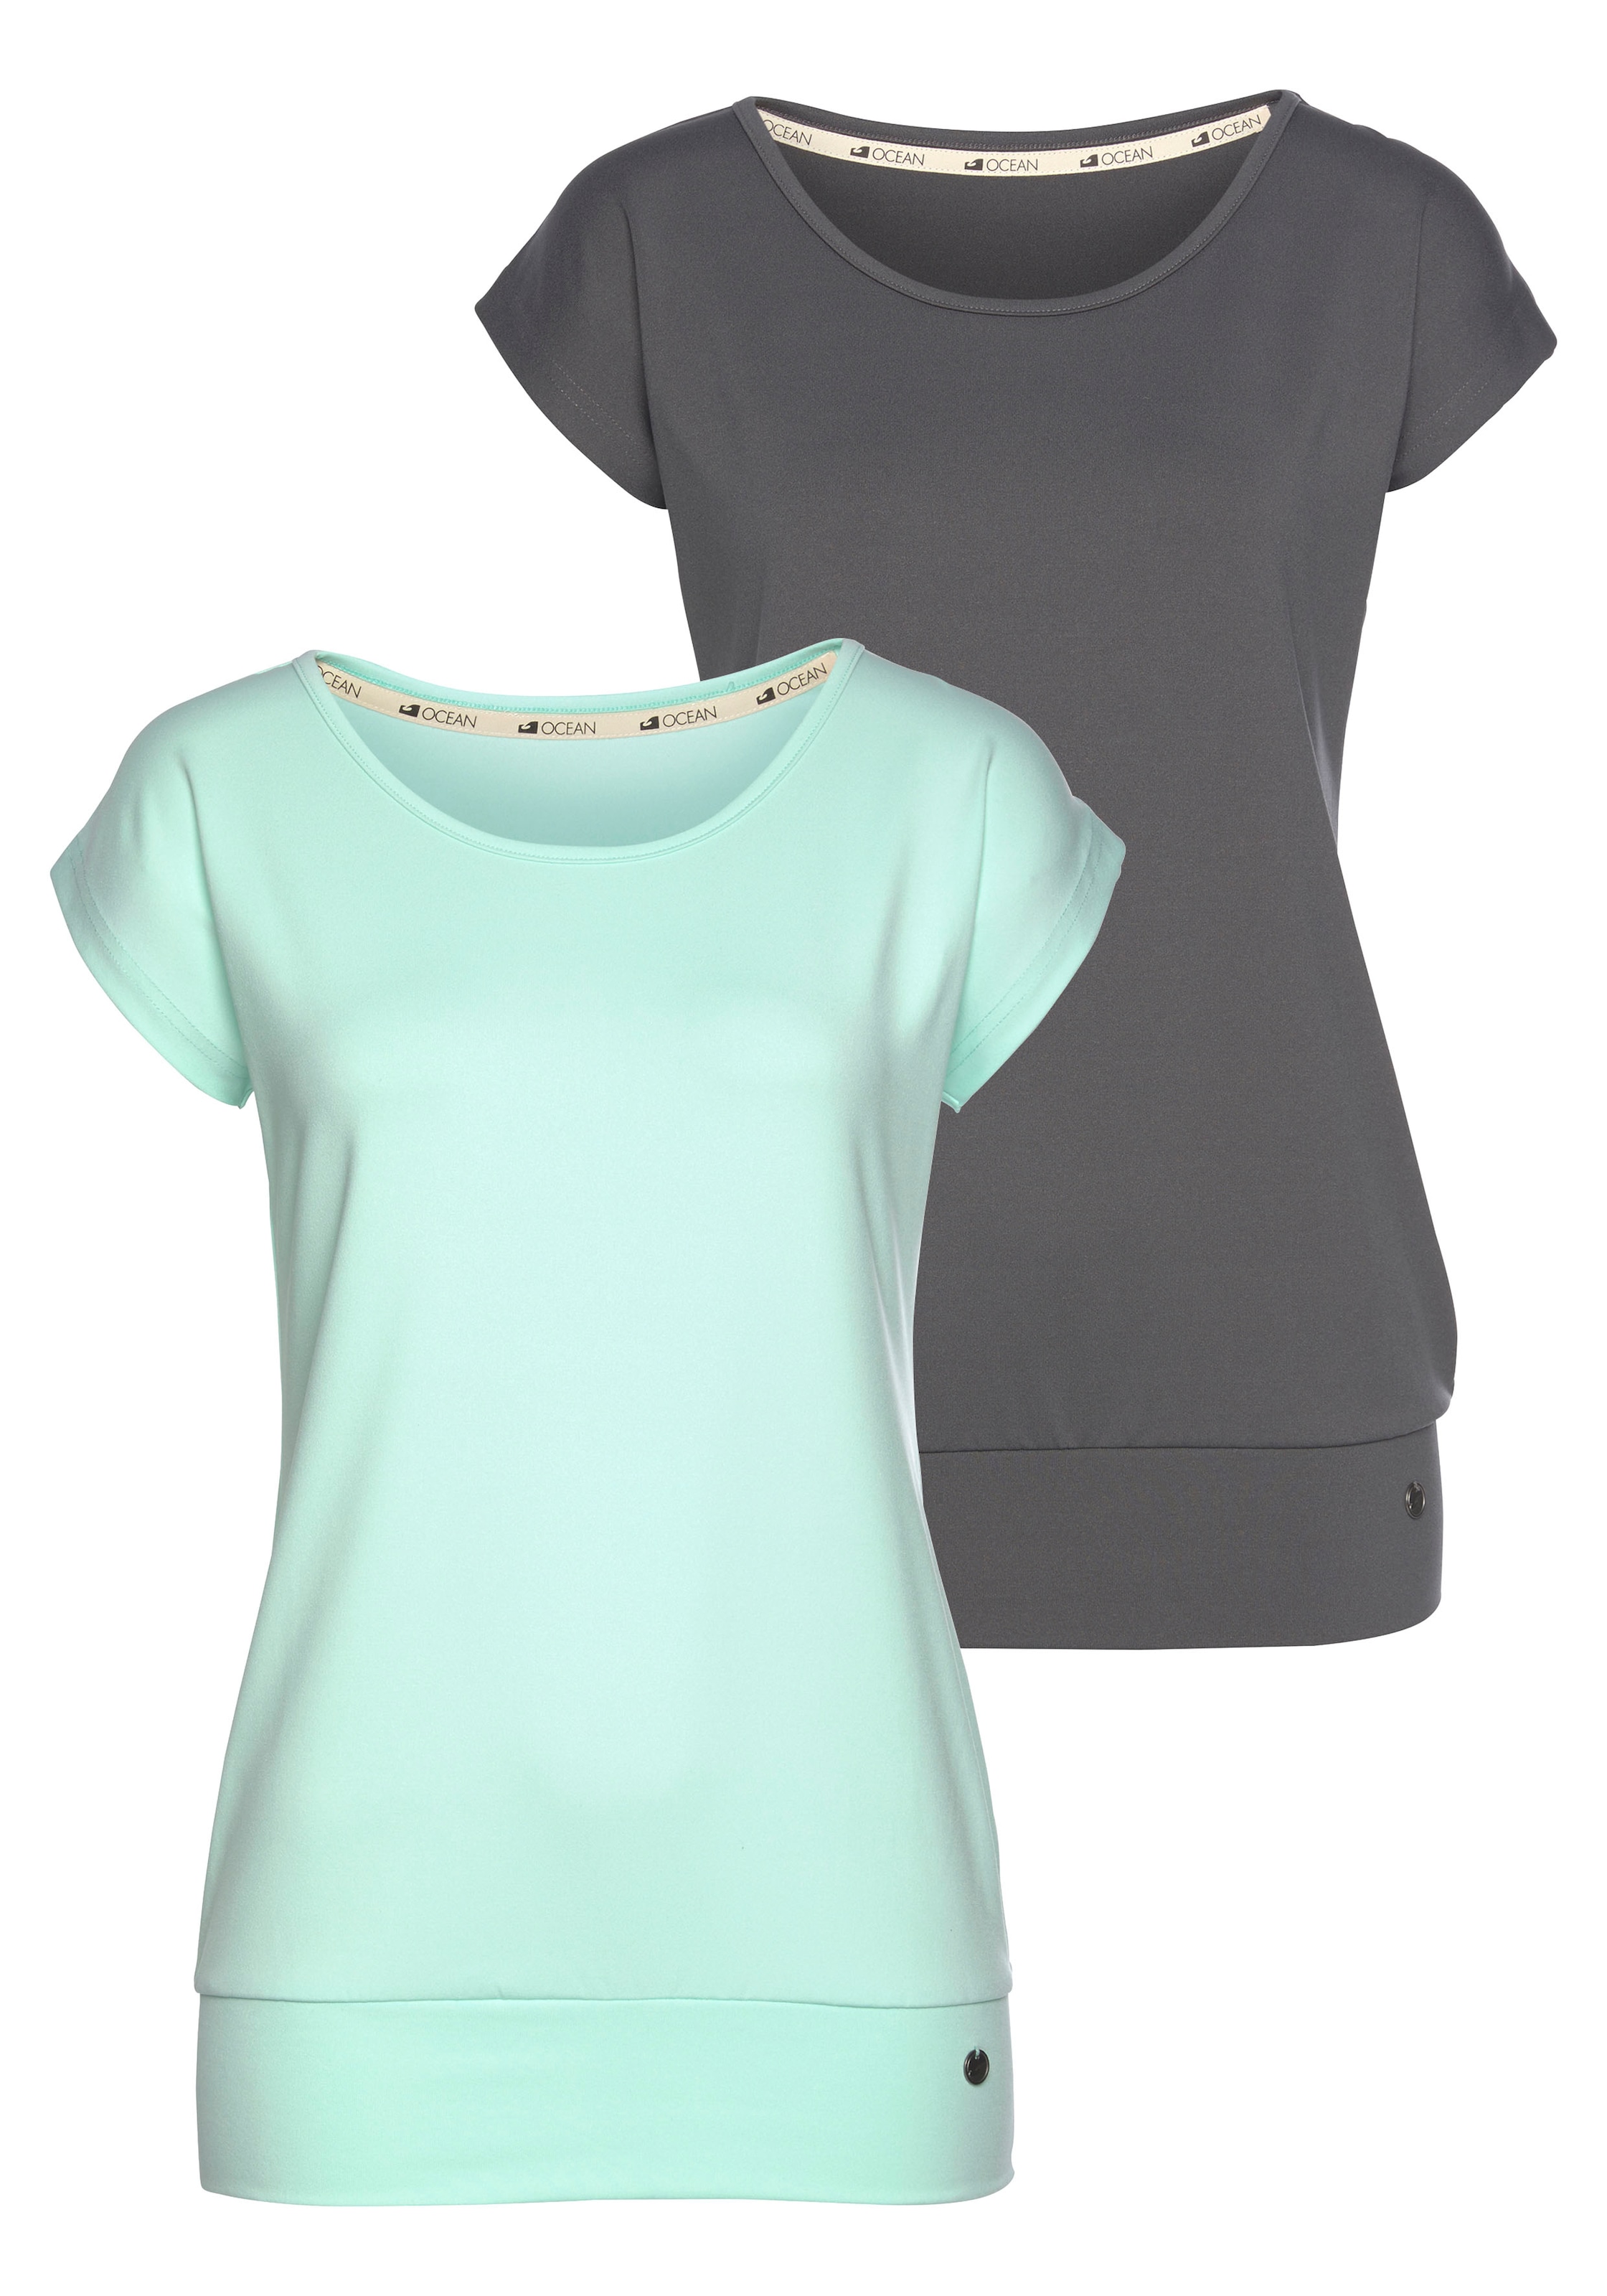 2er-Pack) Yoga - Relax & ( Ocean Sportswear Shirts«, Essentials Shirt Packung, auf Yoga »Soulwear versandkostenfrei